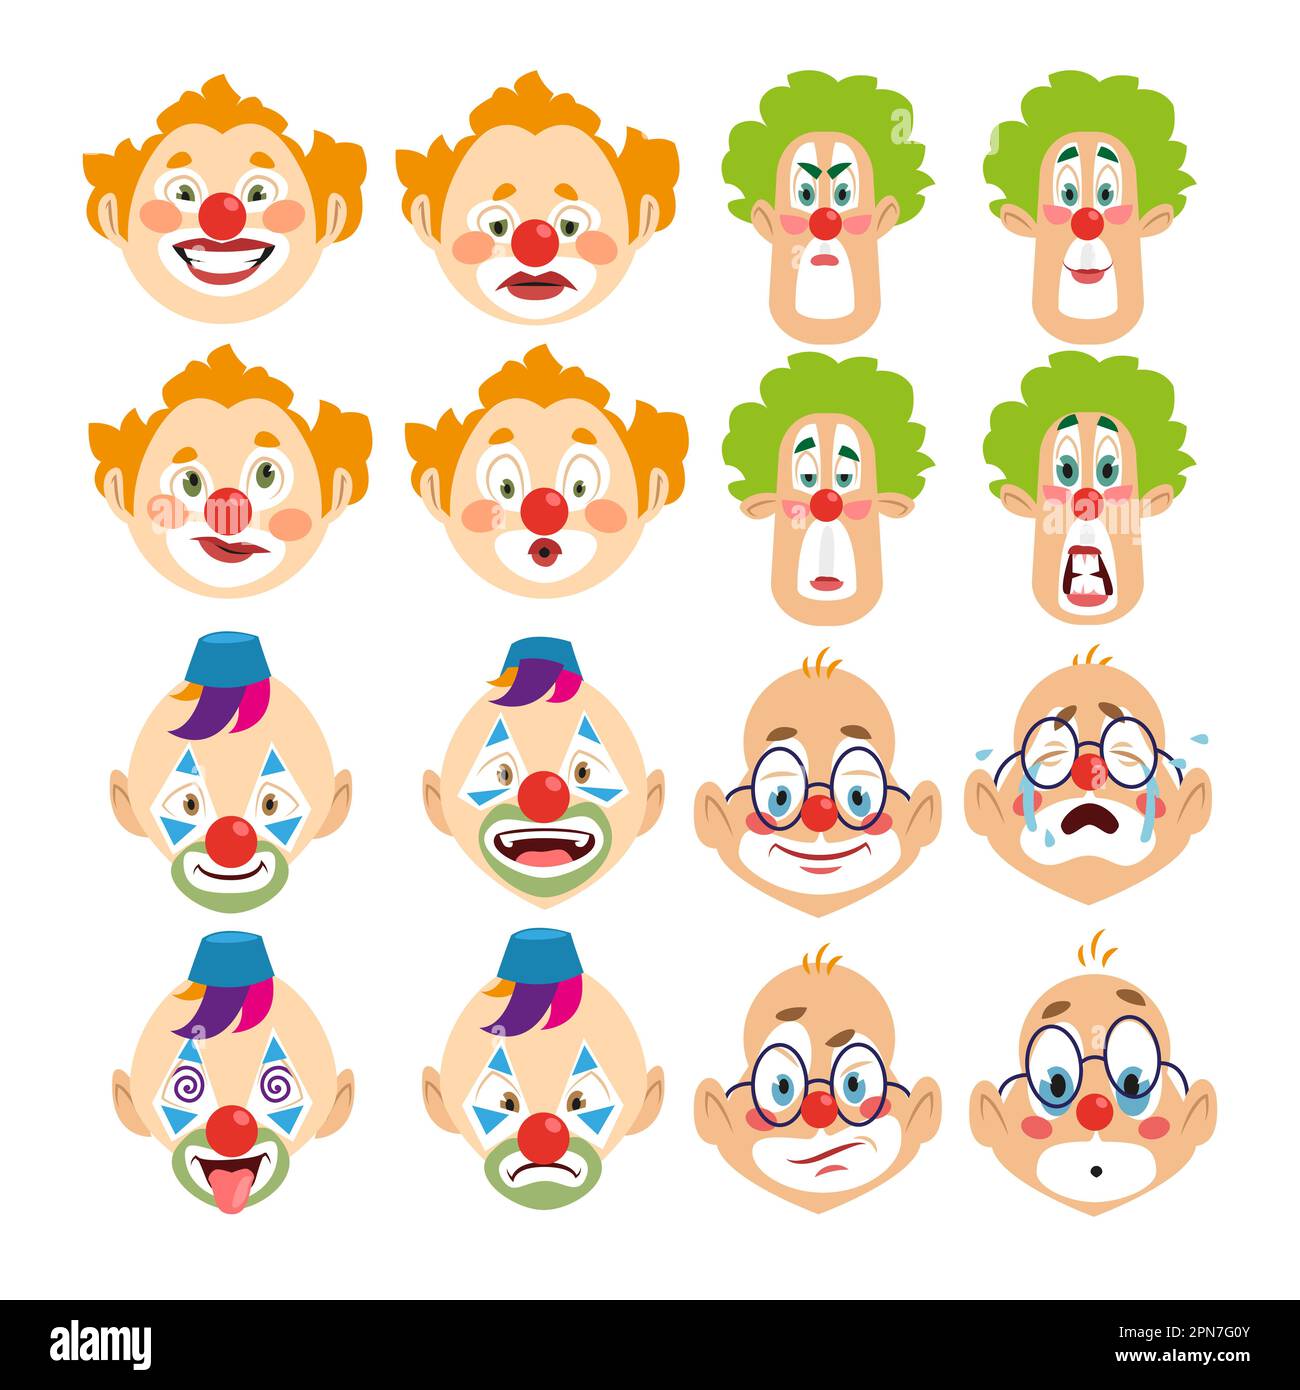 Faces of clown cartoon characters vector illustrations set Stock Vector